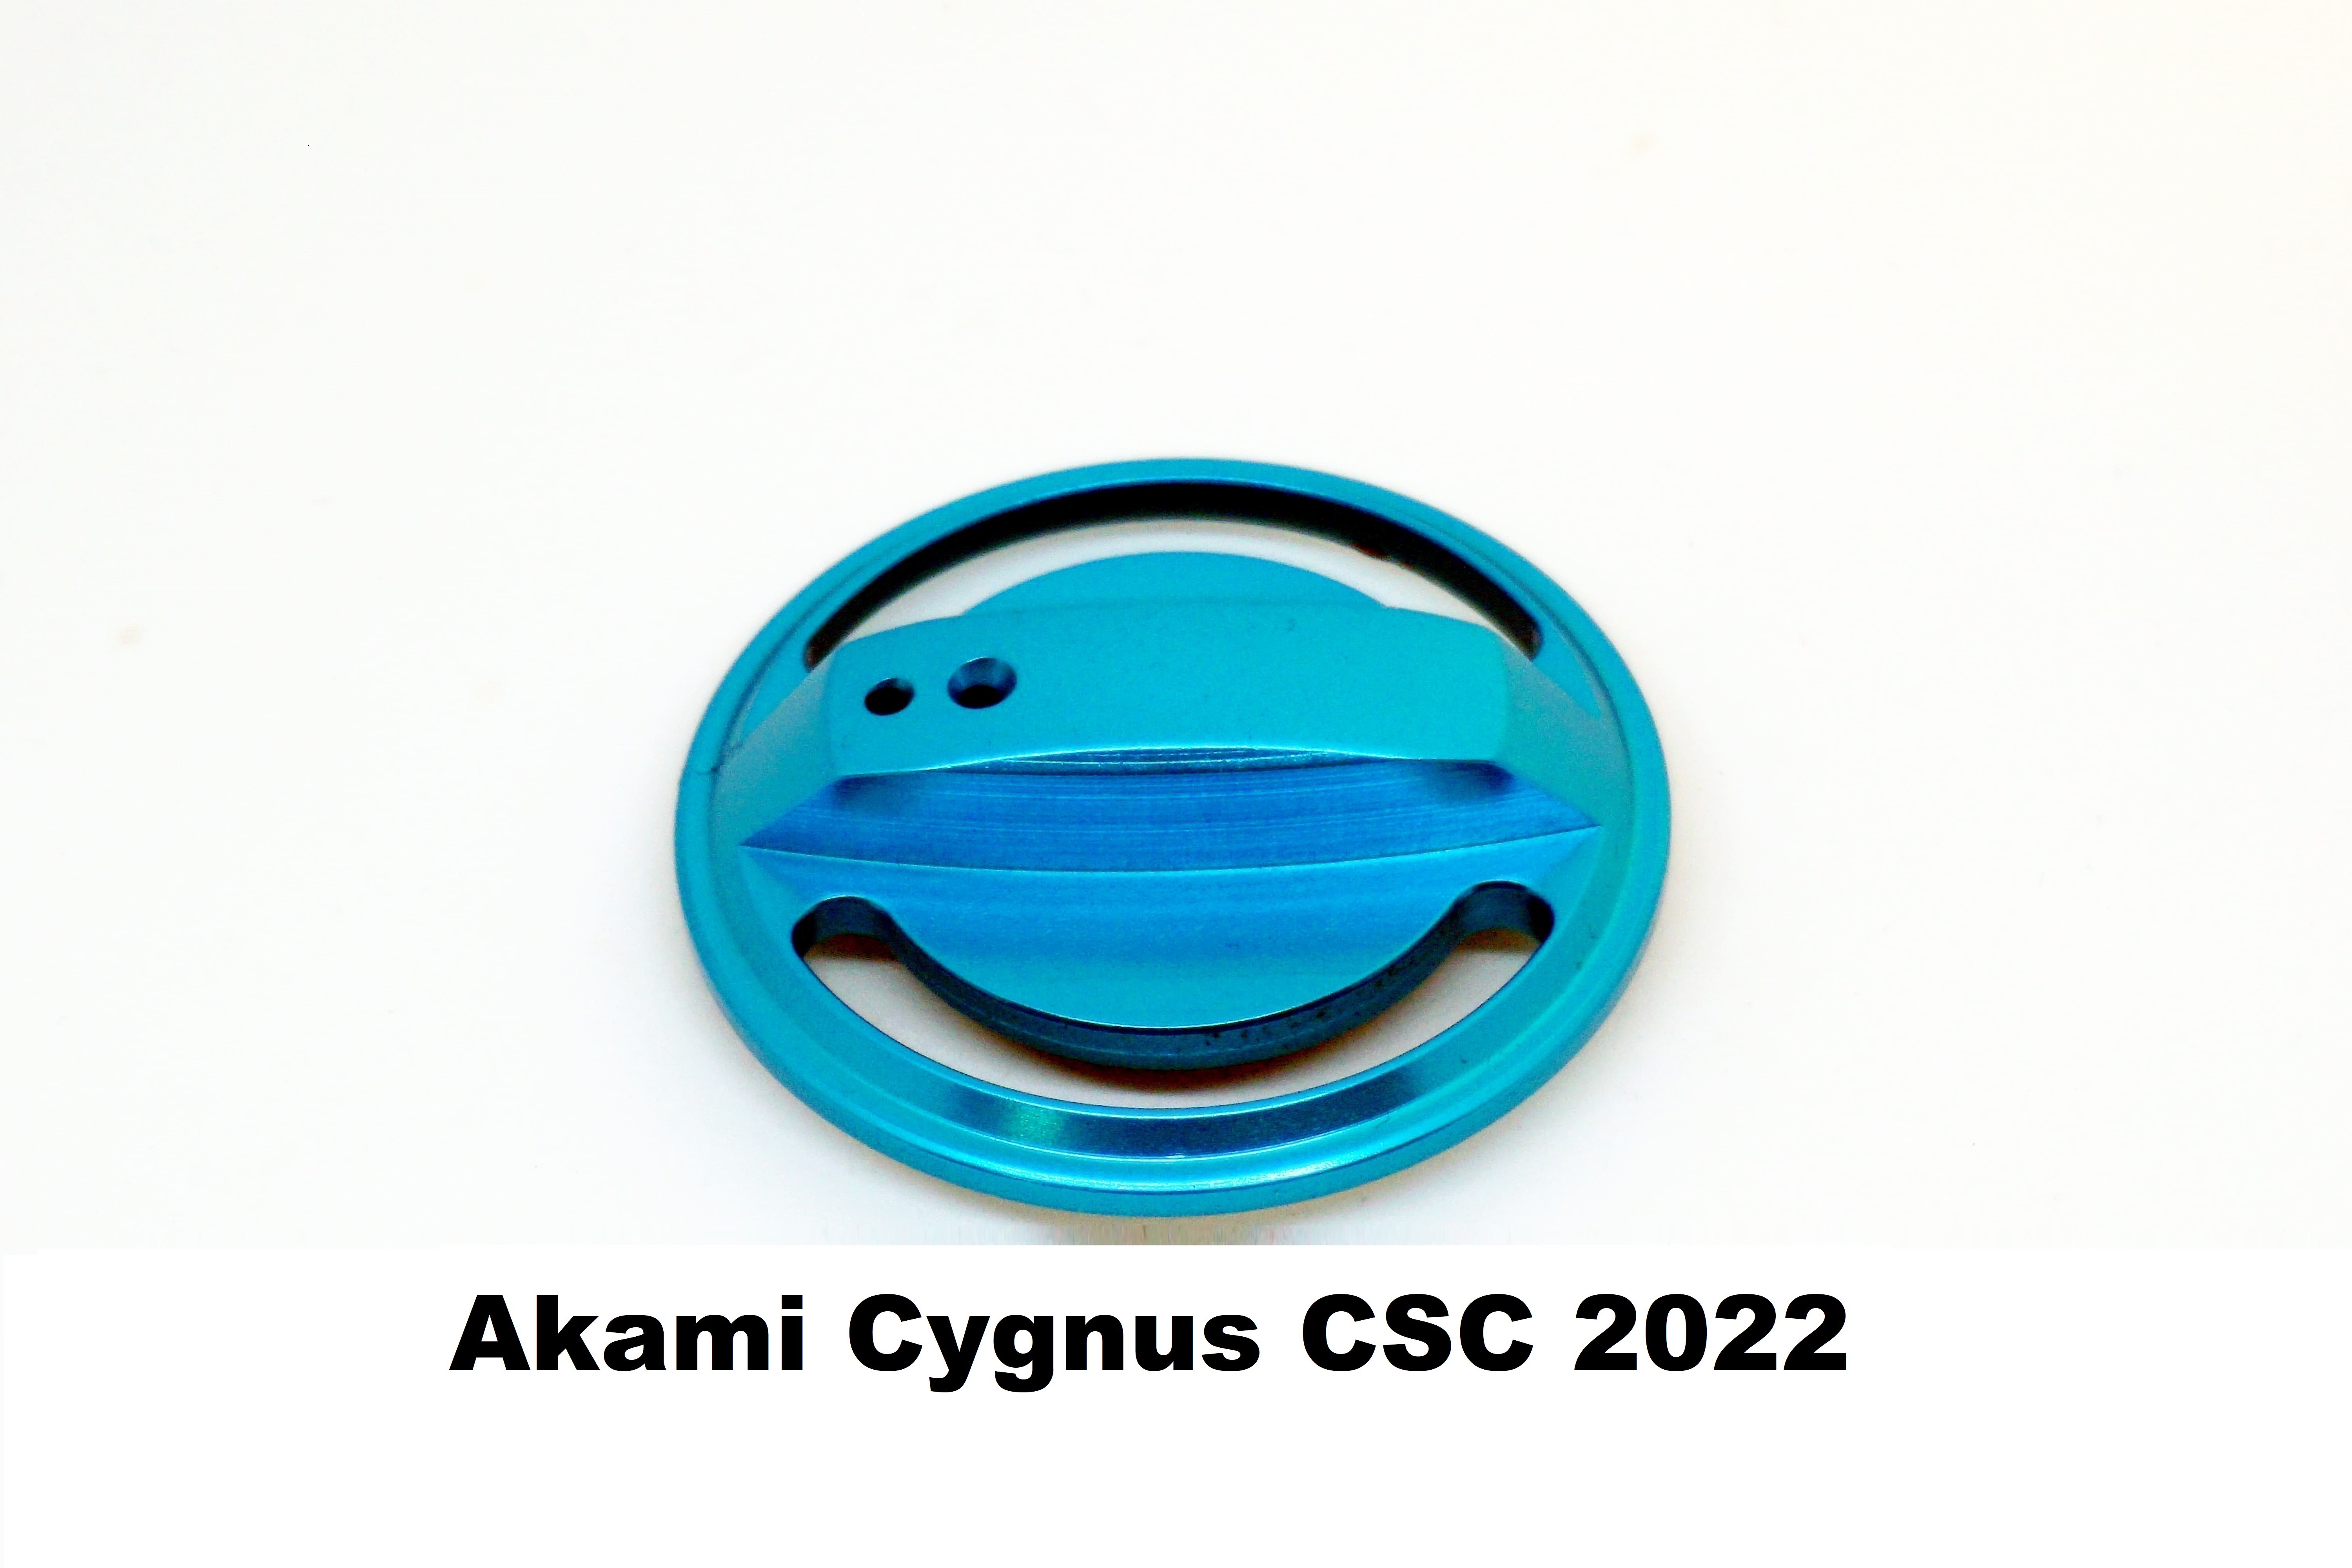 Drag Knob for Akami Cygnus CSC 2022